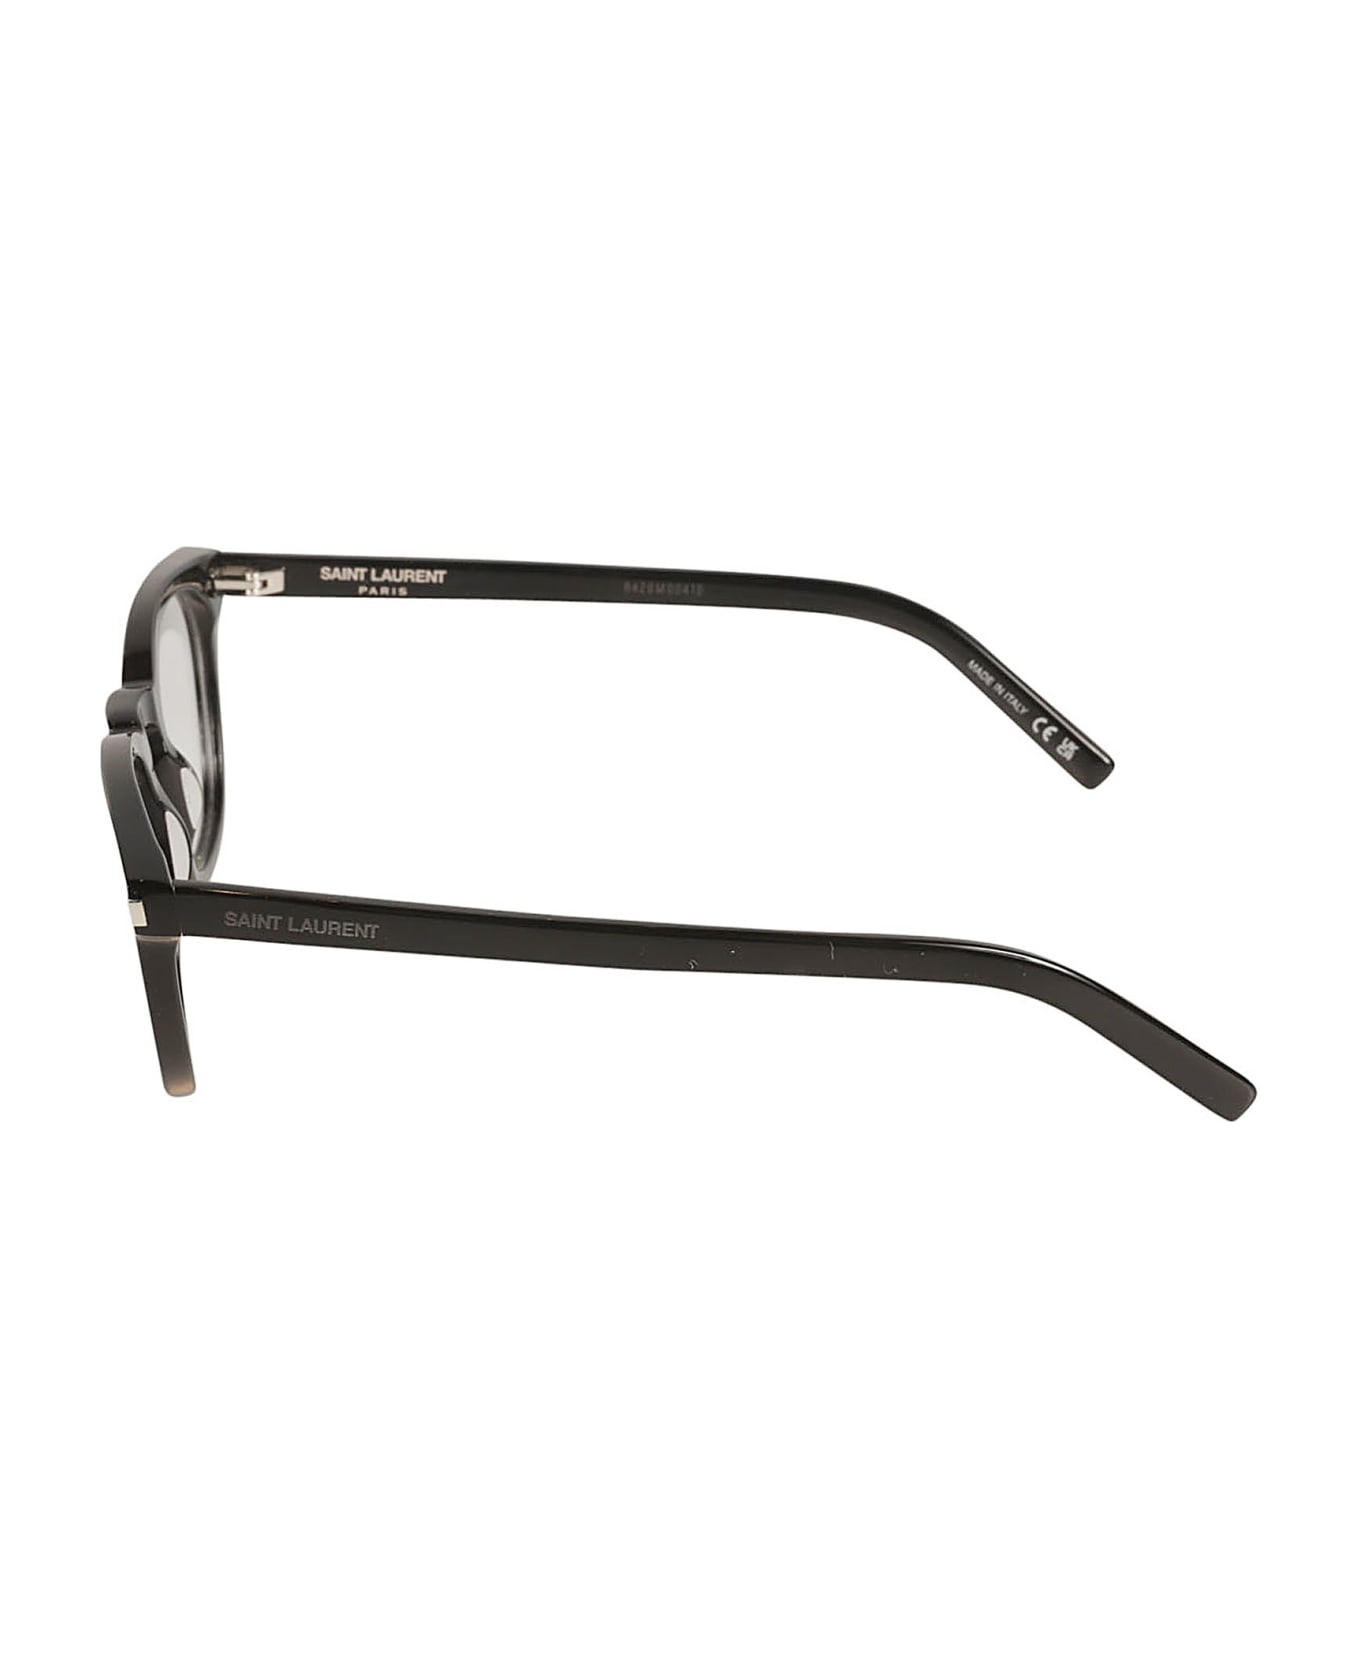 Saint Laurent Eyewear Round Frame Classic Glasses - Black/Transparent